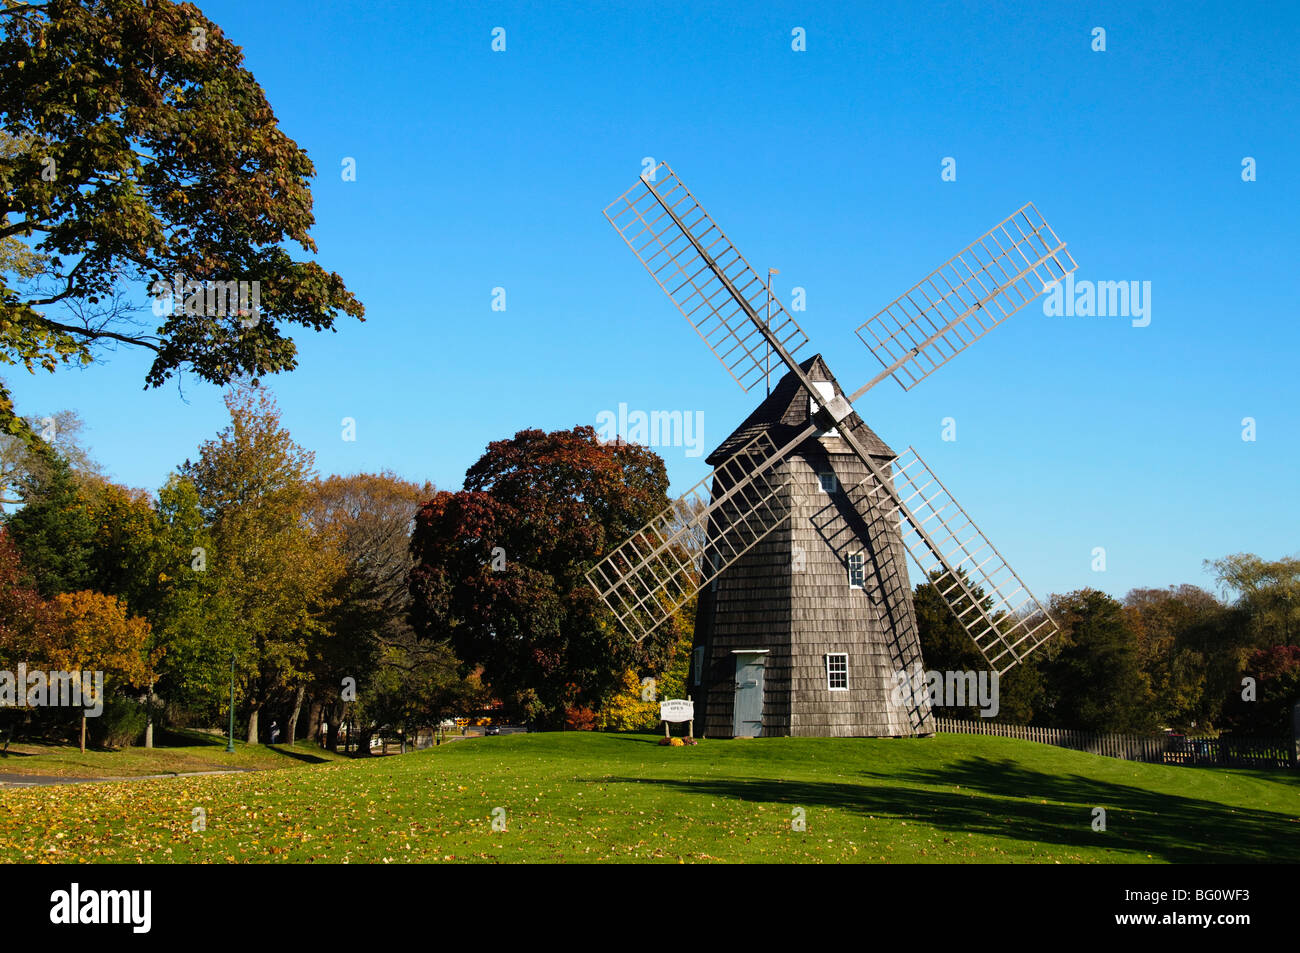 Alte Windmühle Haken, East Hampton, Hamptons, Long Island, New York State, Vereinigten Staaten von Amerika, Nordamerika Stockfoto